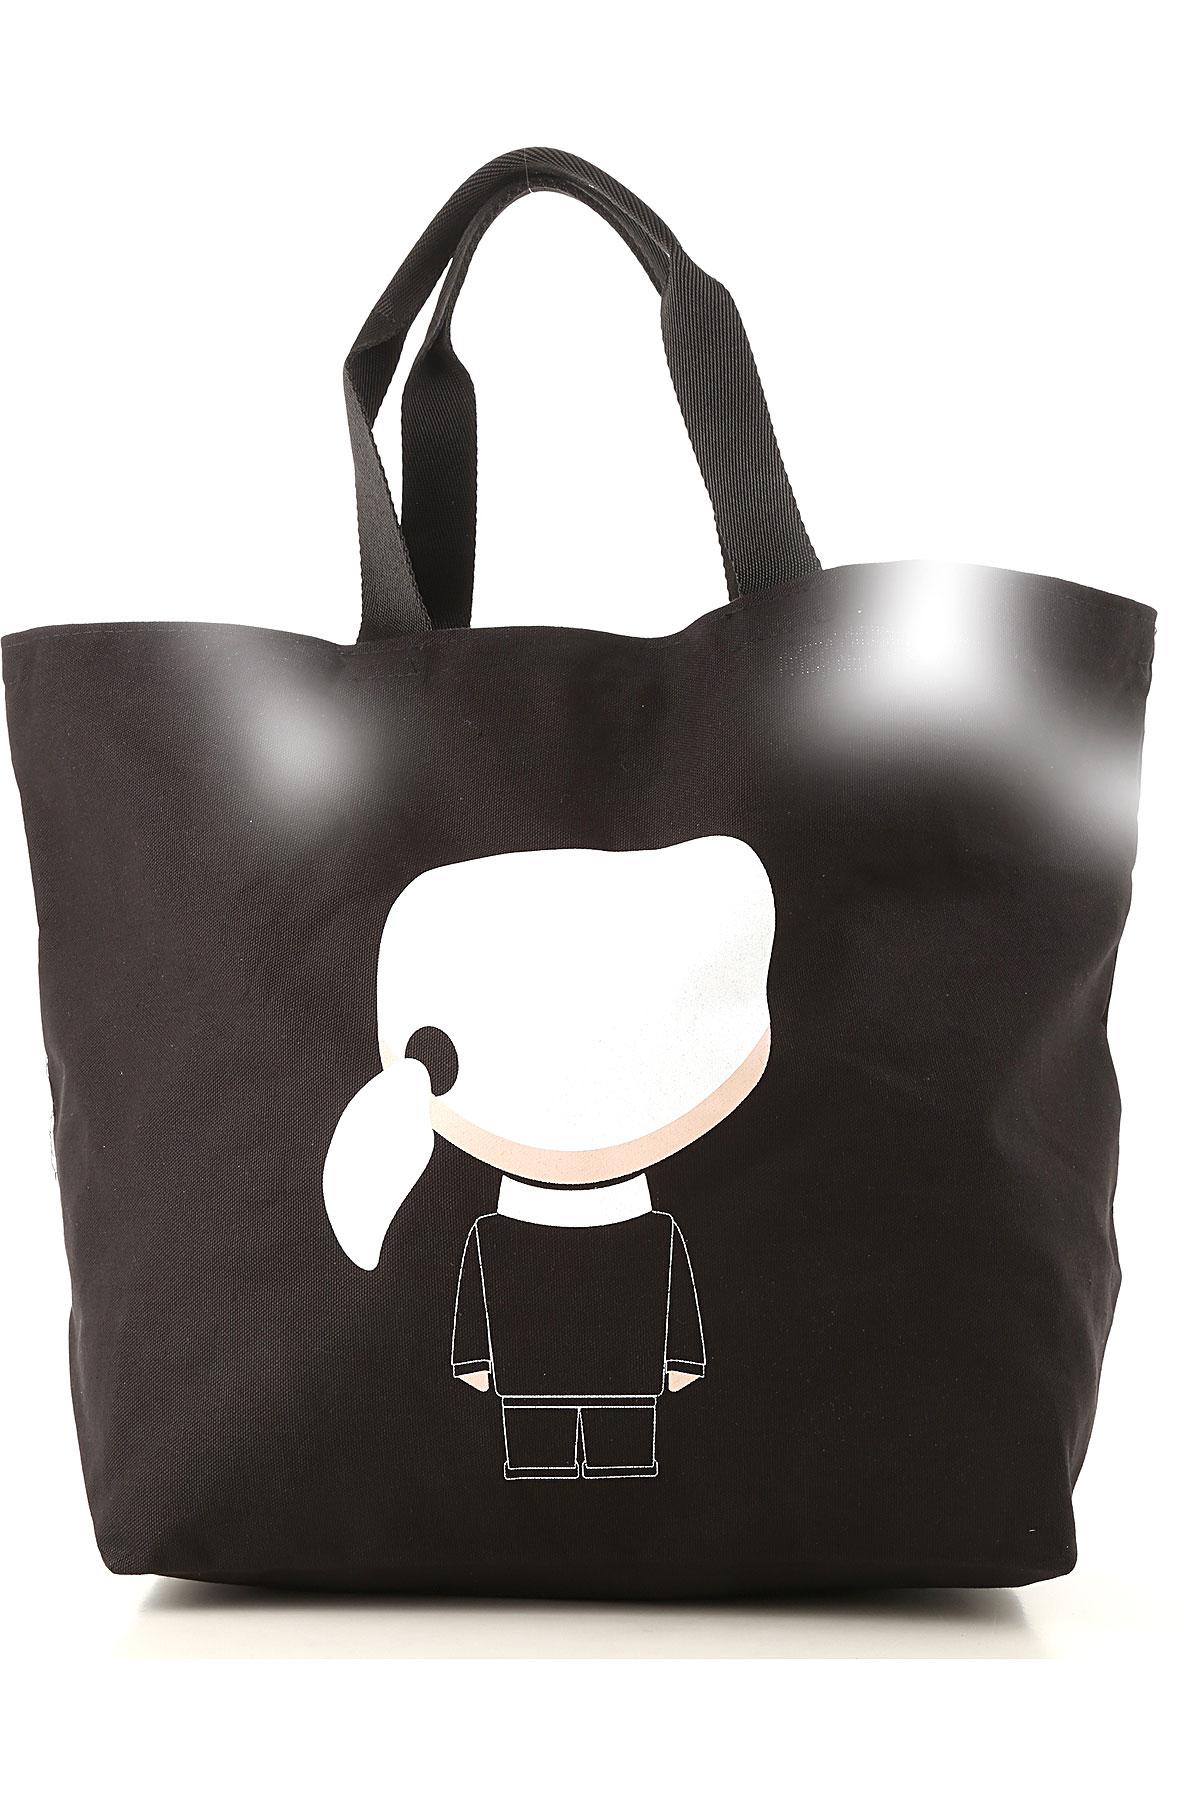 Karl Lagerfeld Canvas Handbags in Black - Lyst